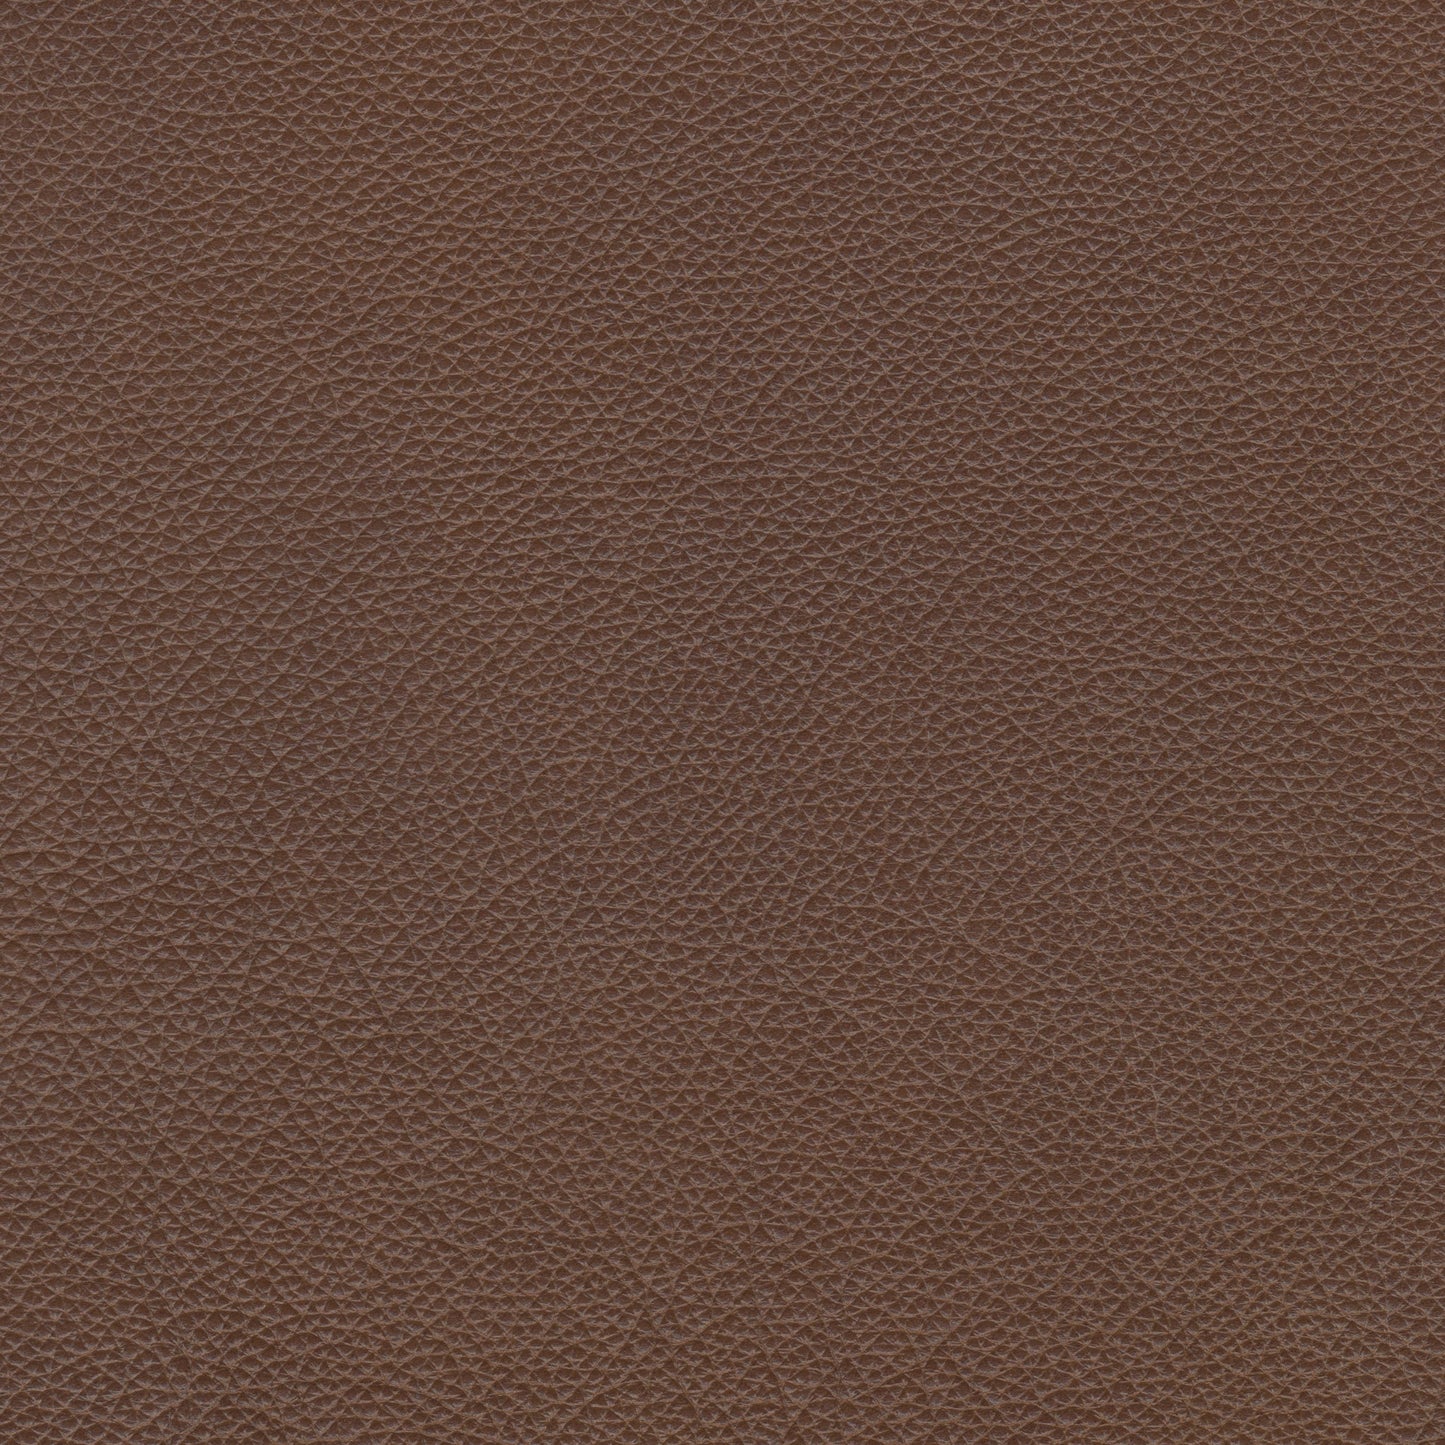 Selvano Bark Leather